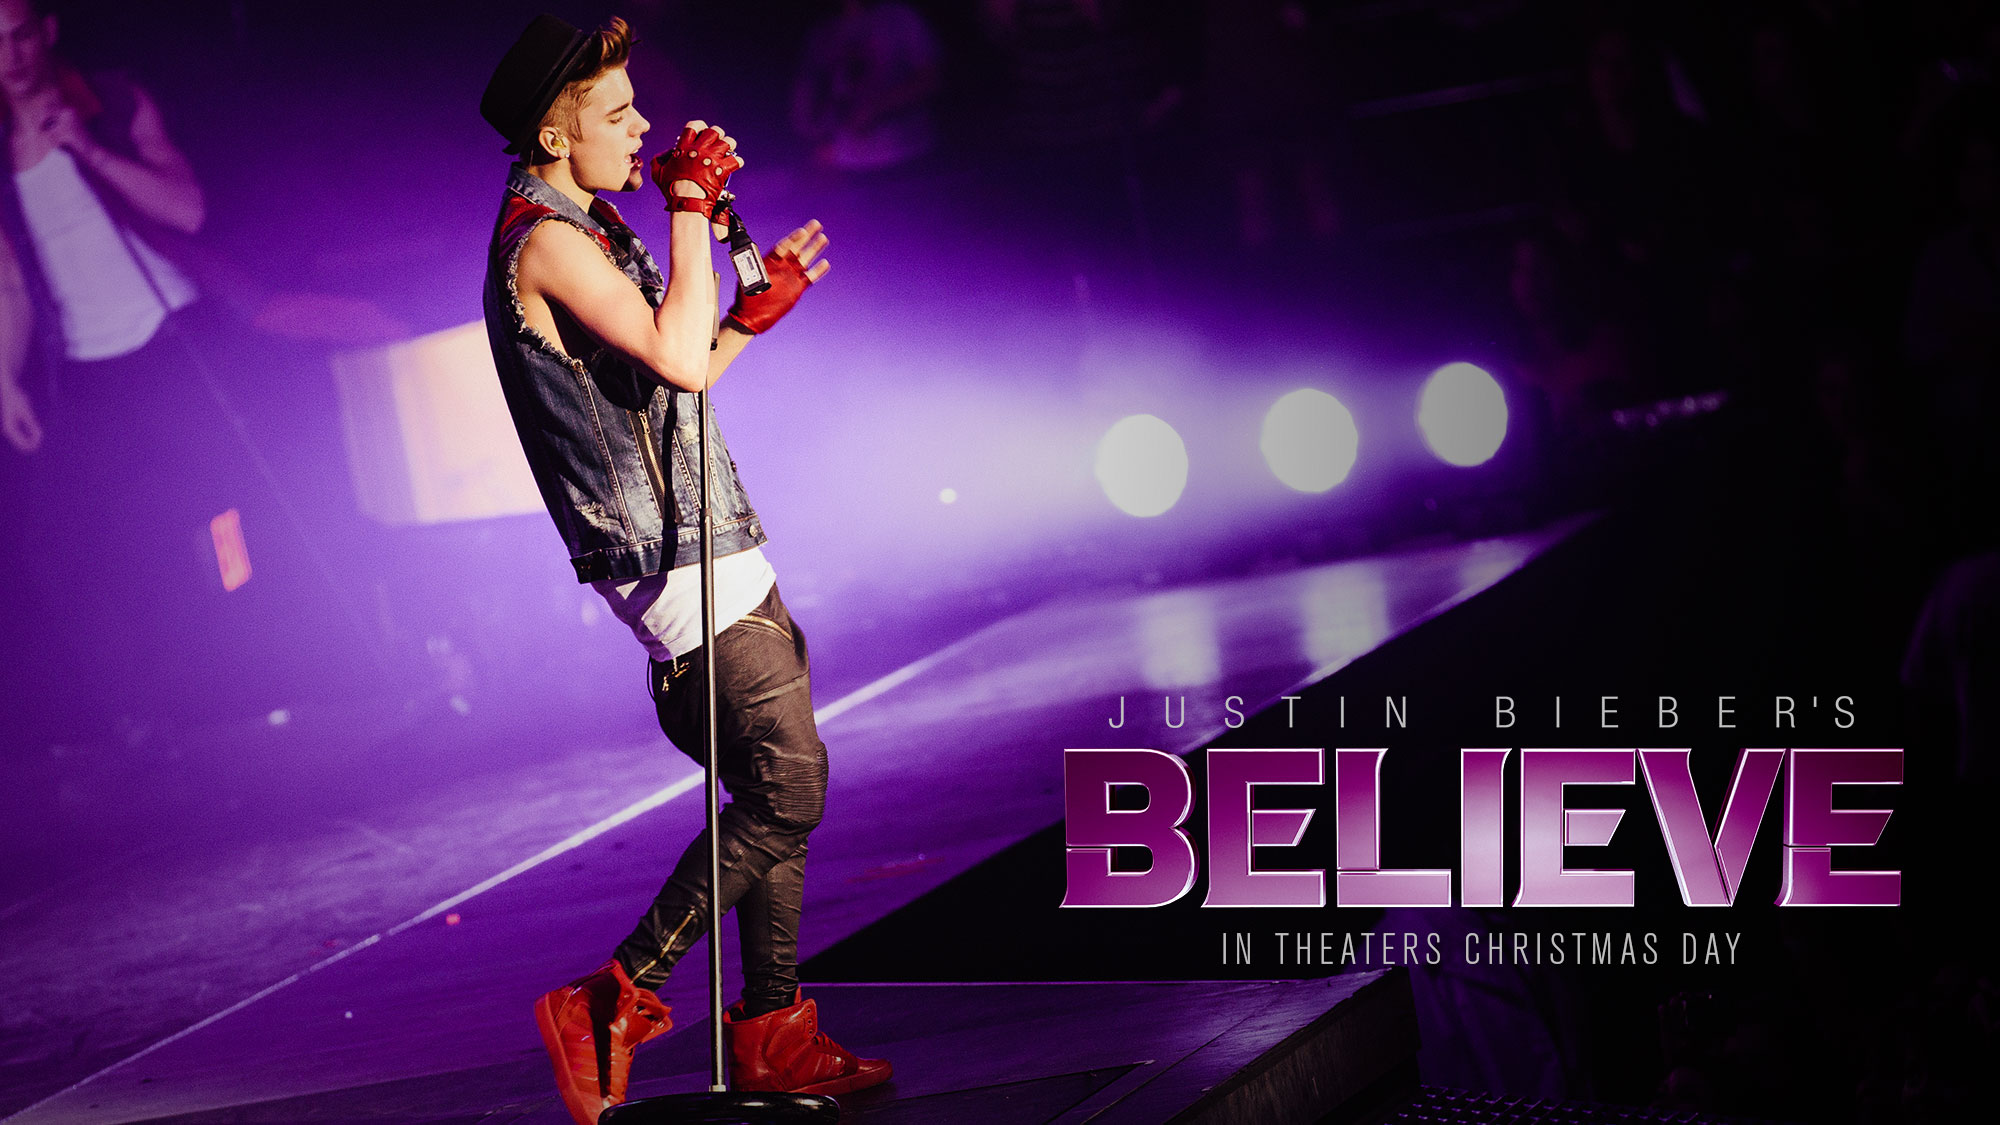 Image - Justin Bieber's Believe wallpaper 2.jpg | Justin Bieber Wiki | FANDOM powered ...2000 x 1125